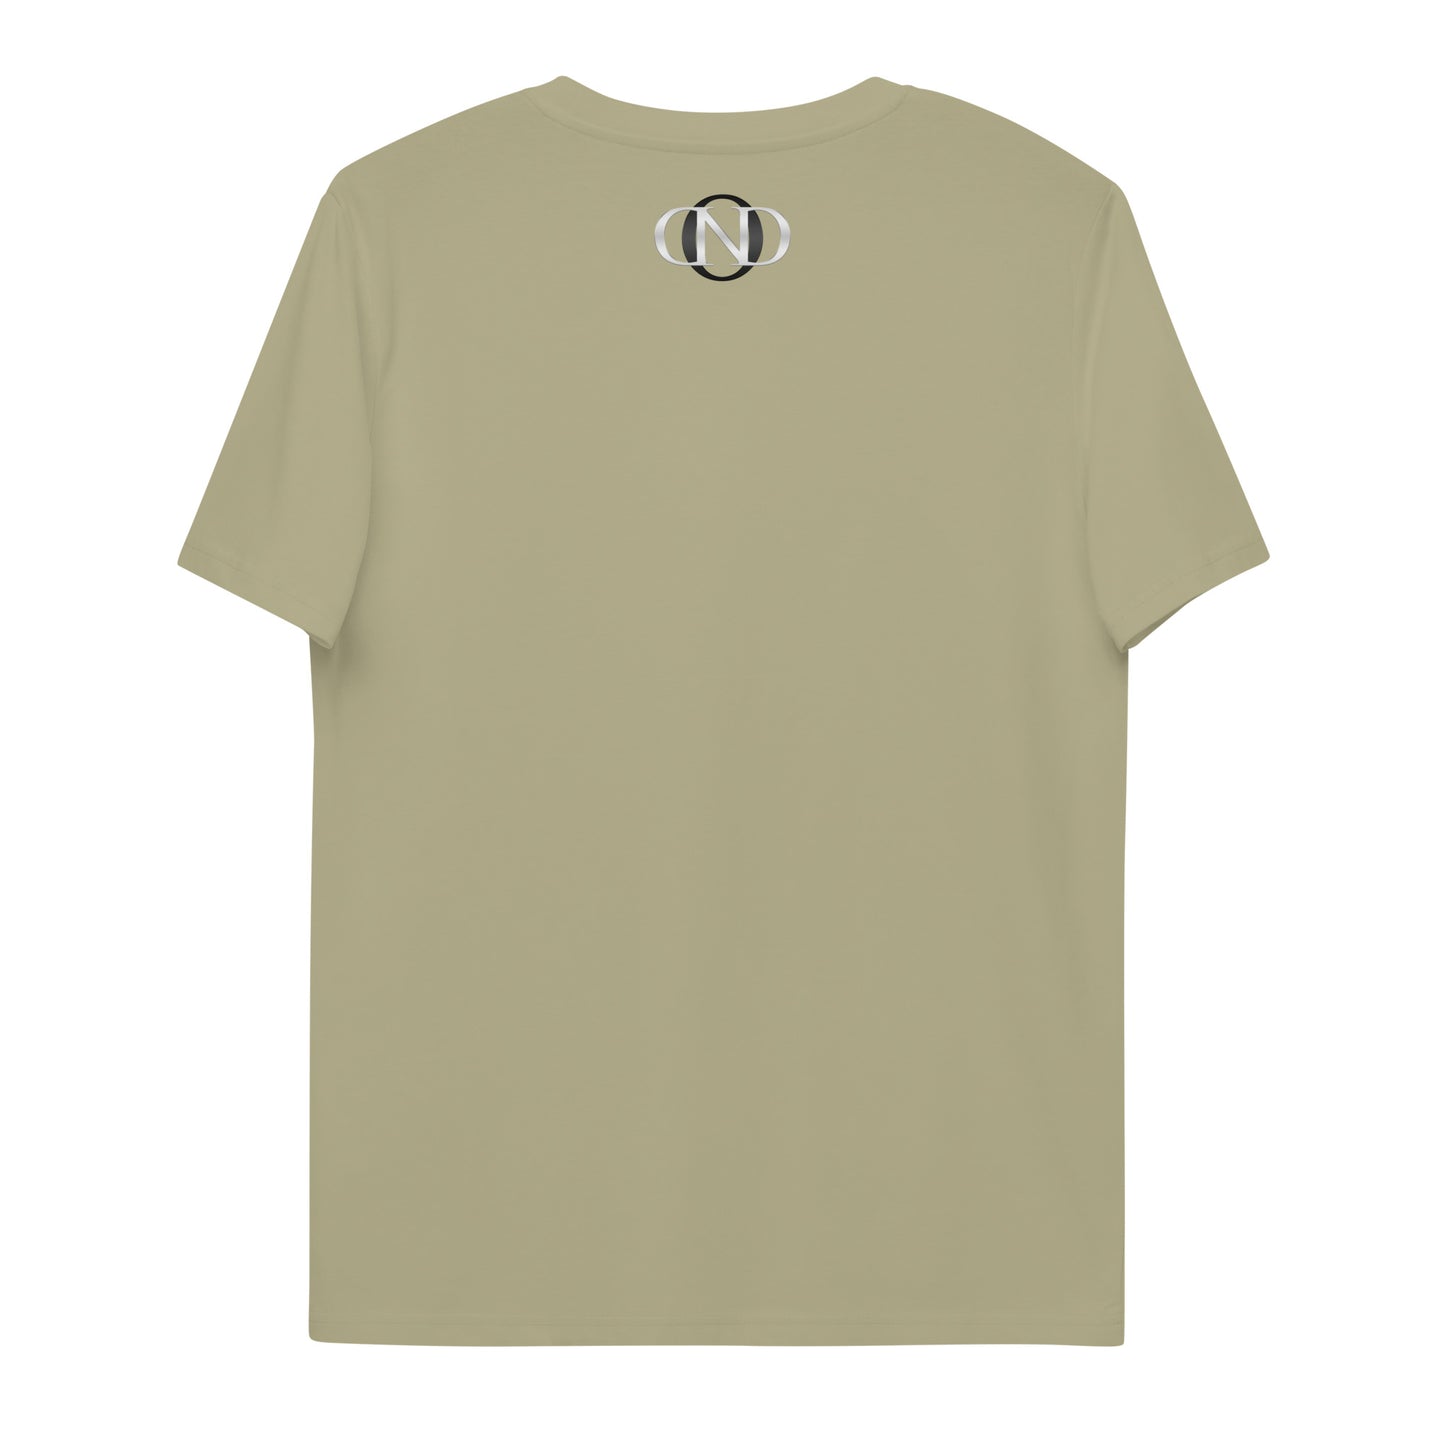 Neduz Designs Expose Wishful Dreaming Unisex organic cotton t-shirt